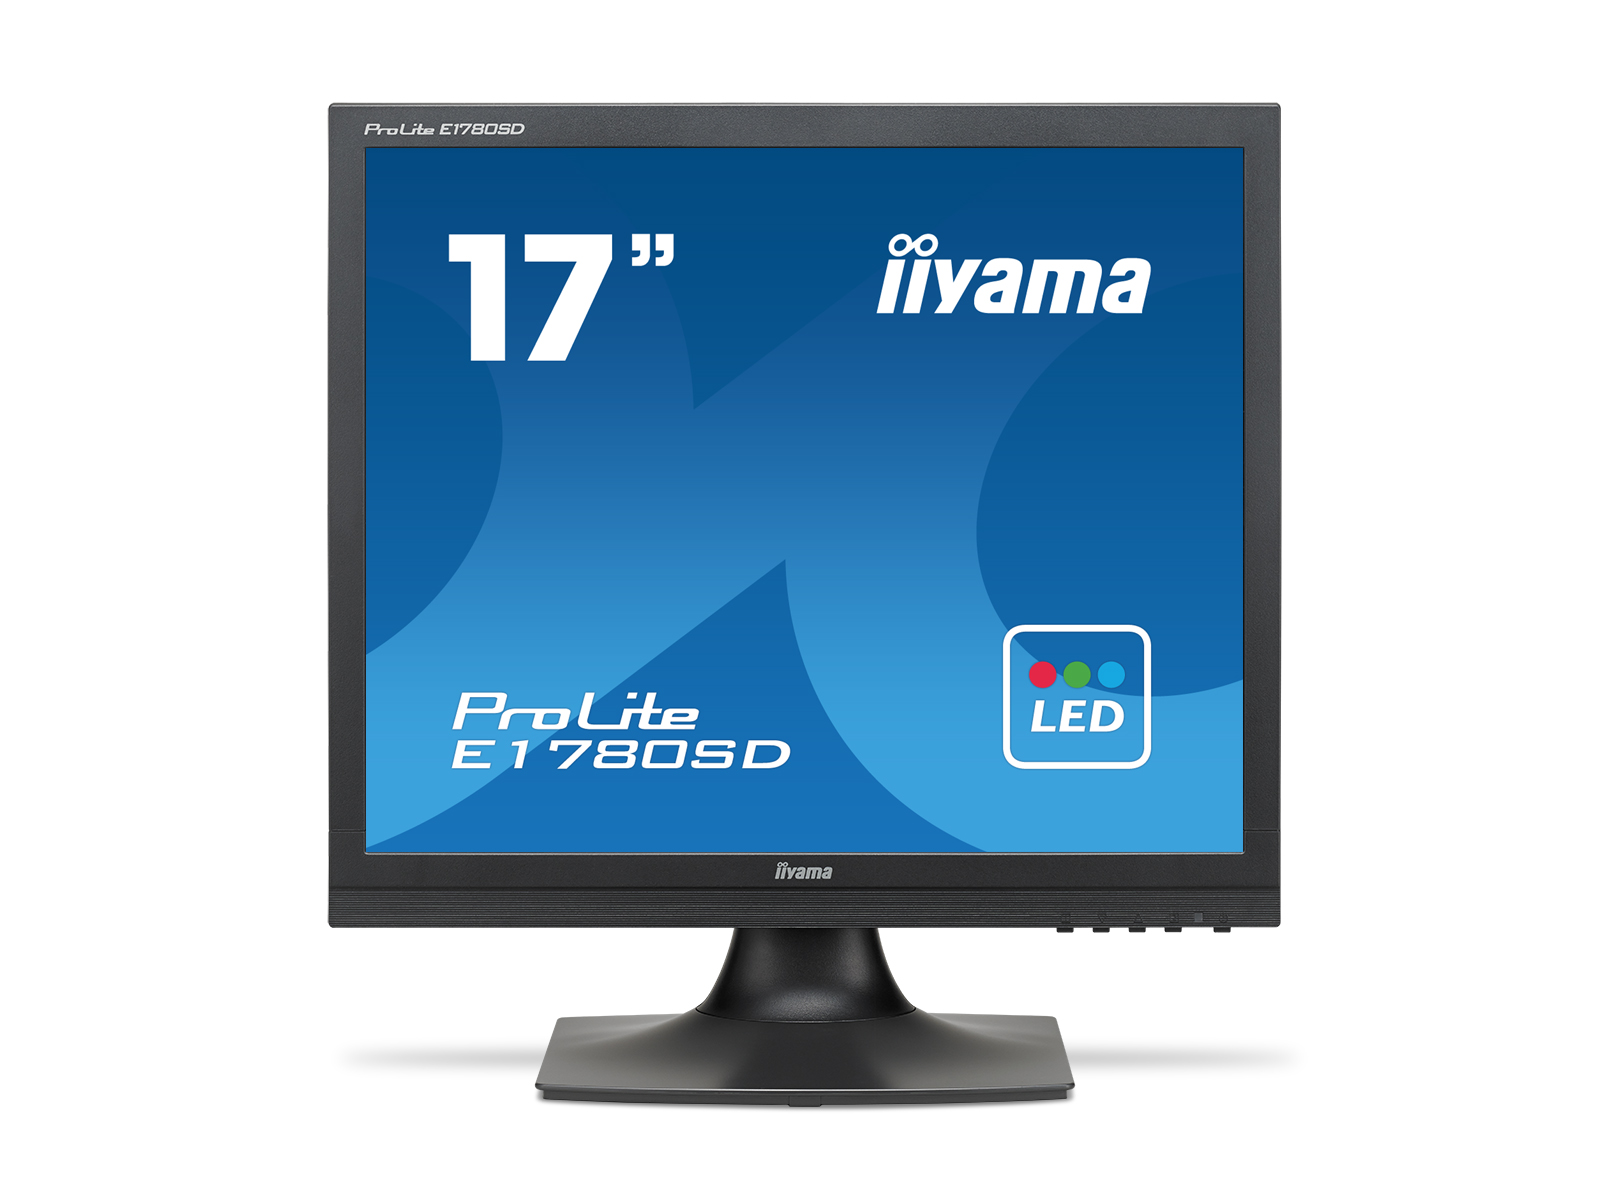 IIYAMA Prolite E1780SD-B1 17inch LED LCD 1280x1024 TN panel Speakers VGA DVI 250cd/m2 5ms TCO6